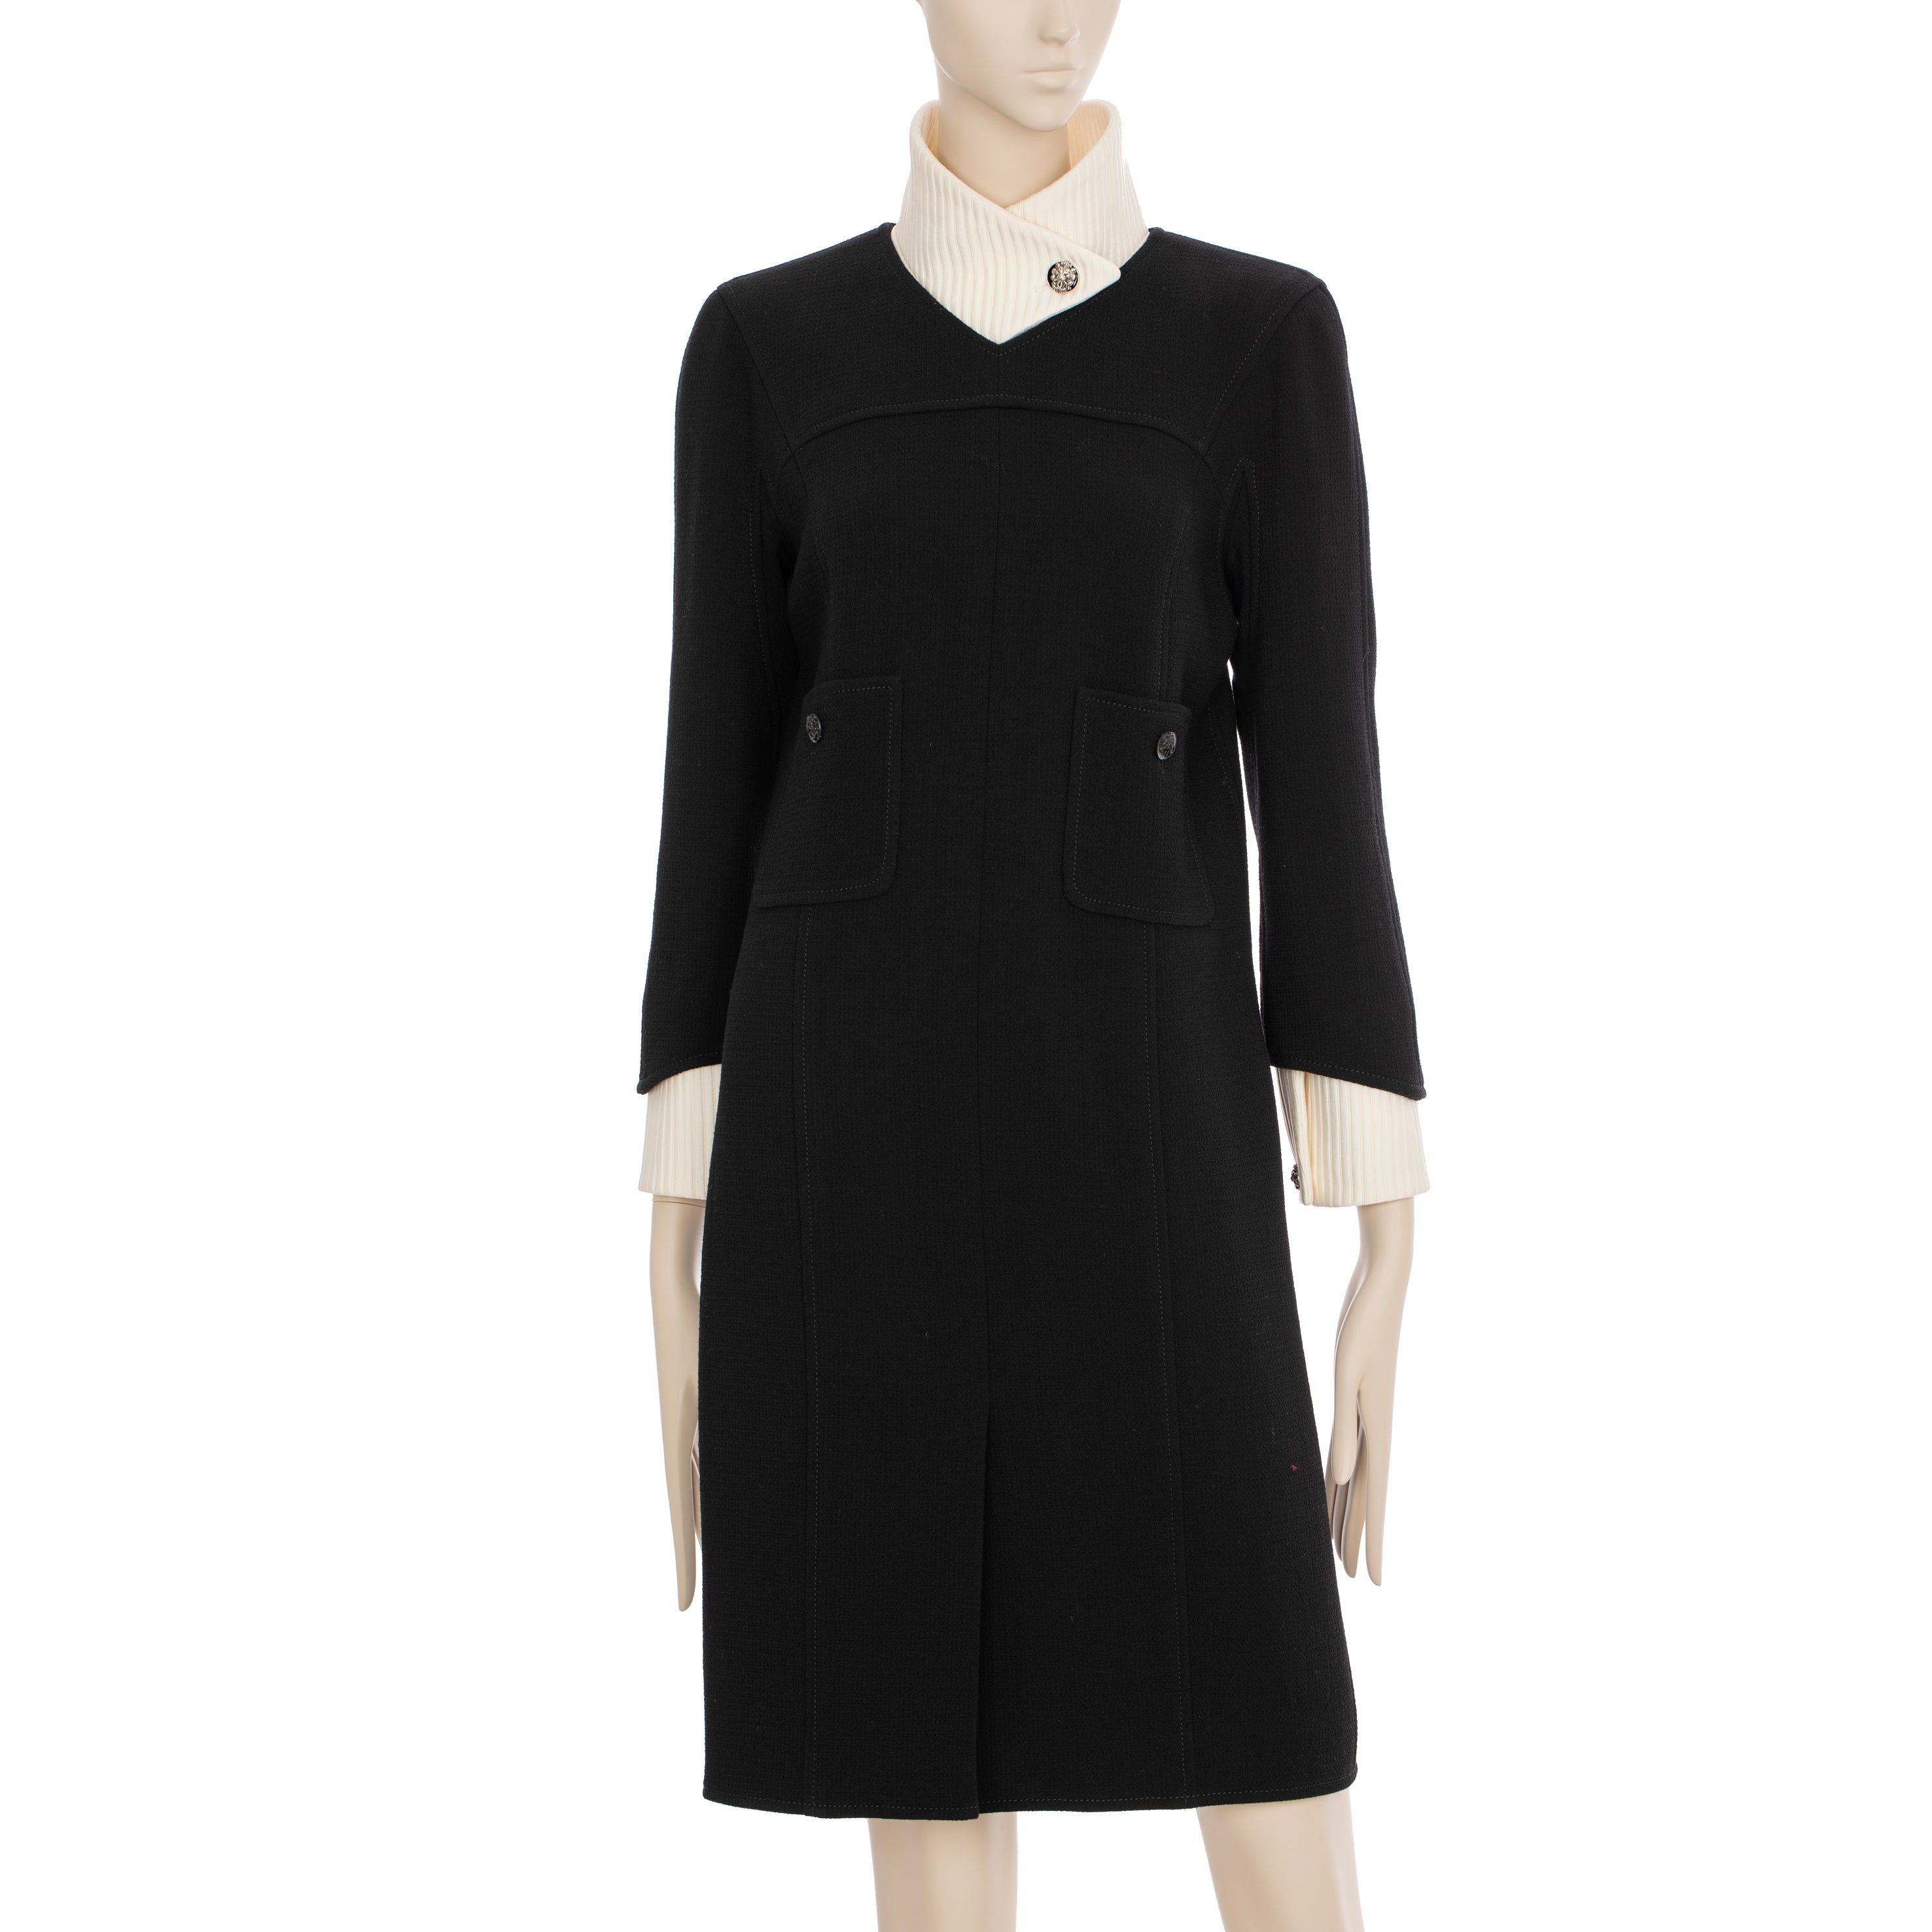 Chanel Long Black Dress With Detachable Collar & Cuff 40 FR